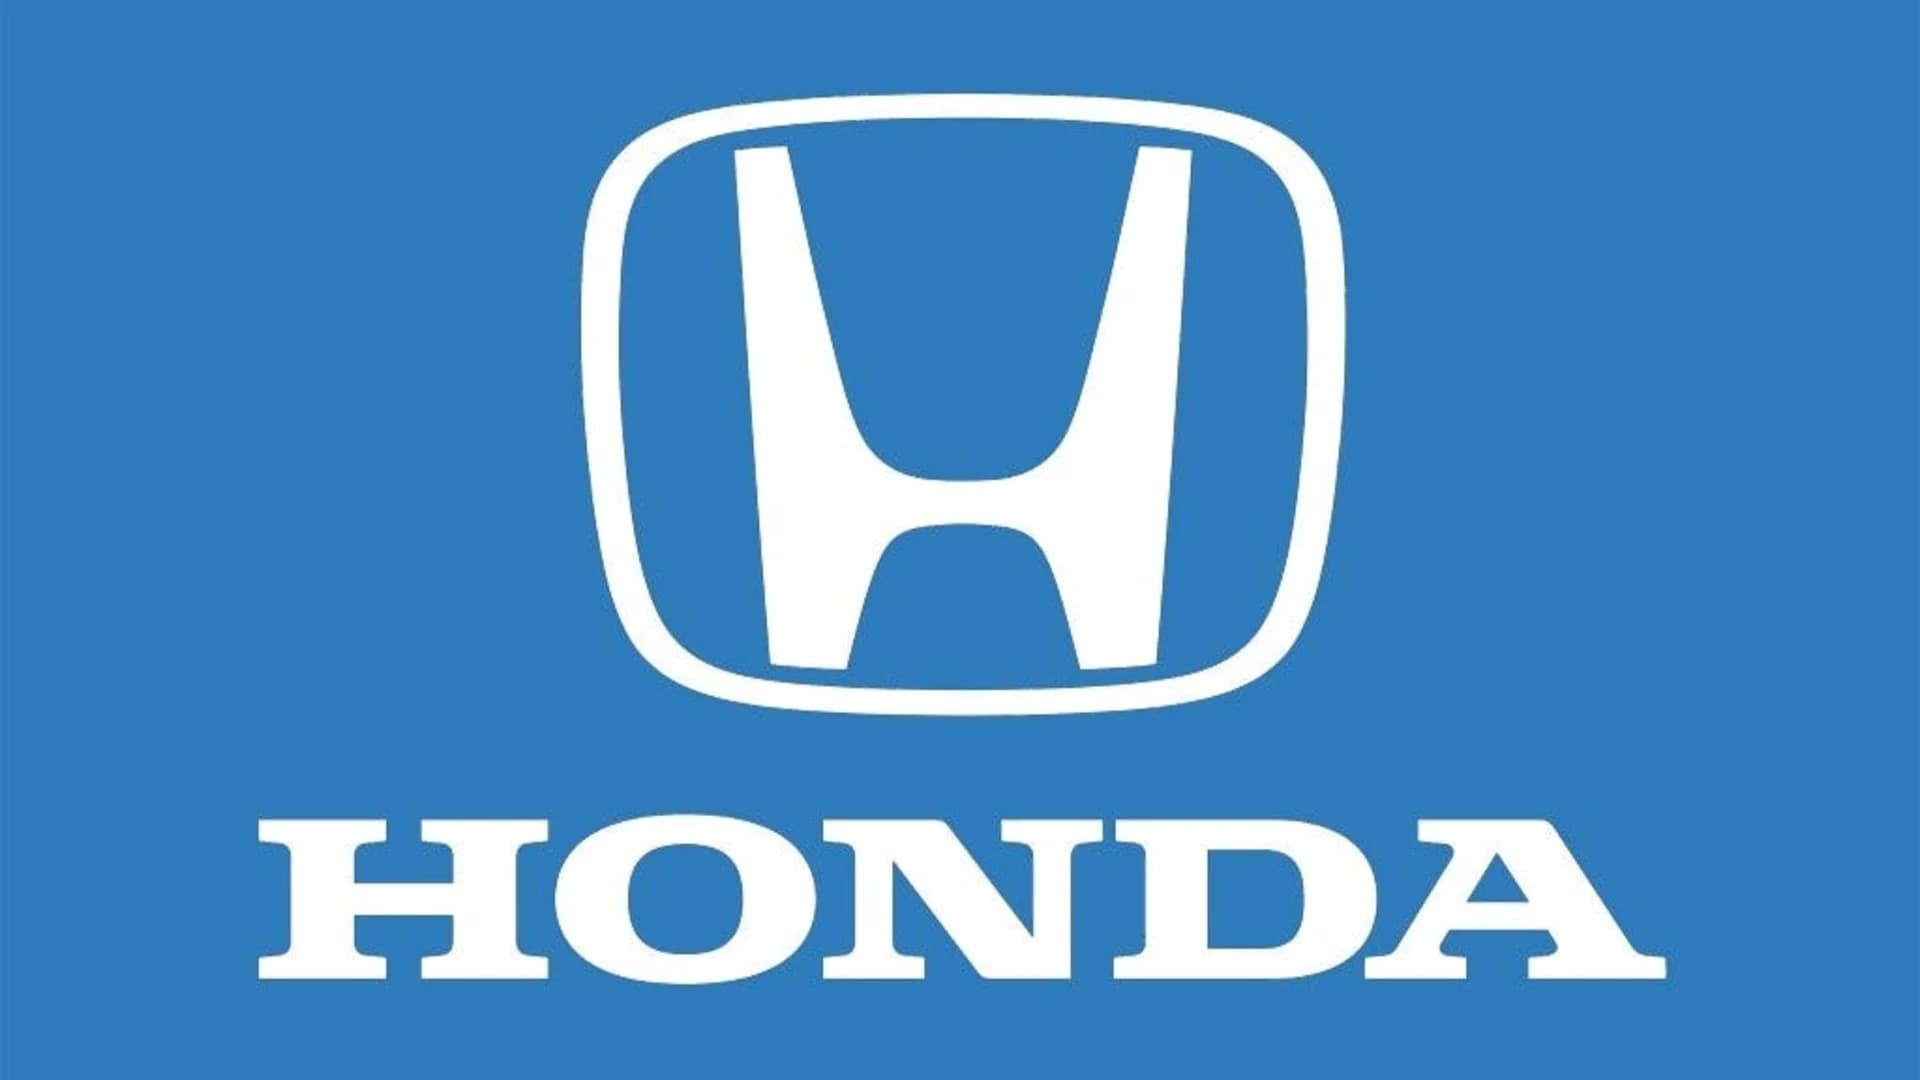 Honda recalls 1.2M more vehicles with dangerous airbags